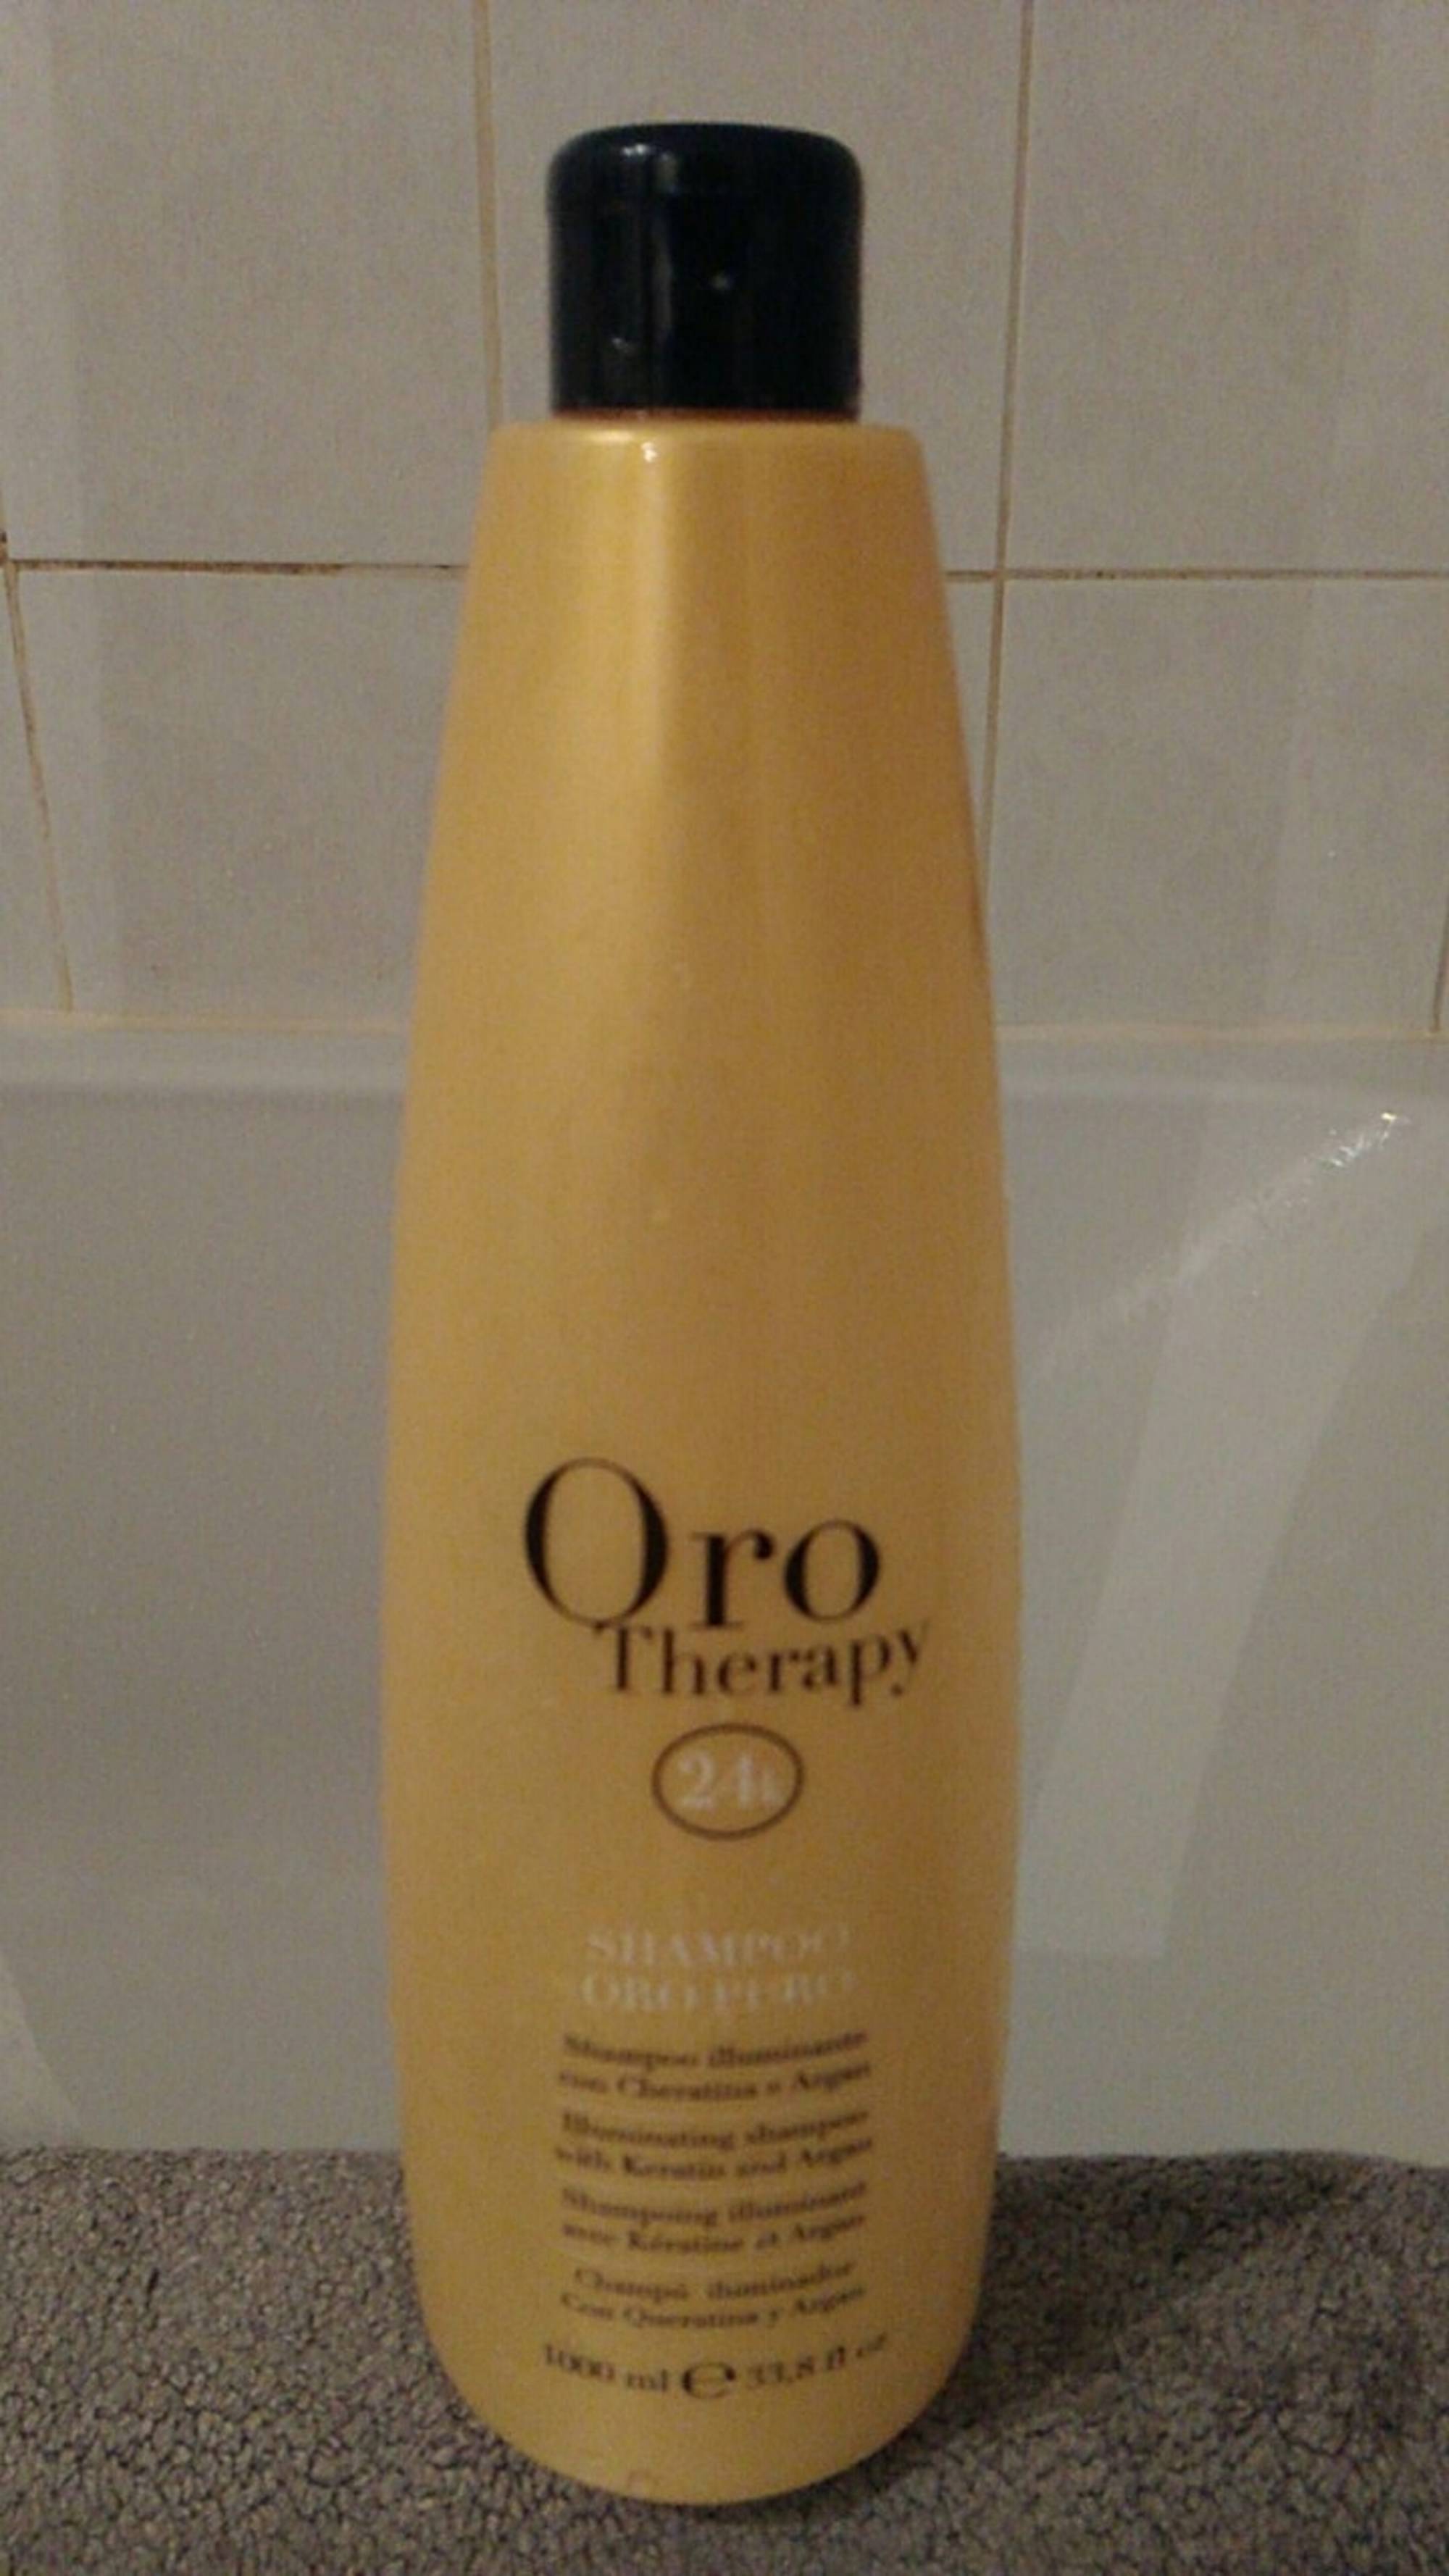 ORO THERAPY 24K - Shampooing illuminant avec Kératine et Argan